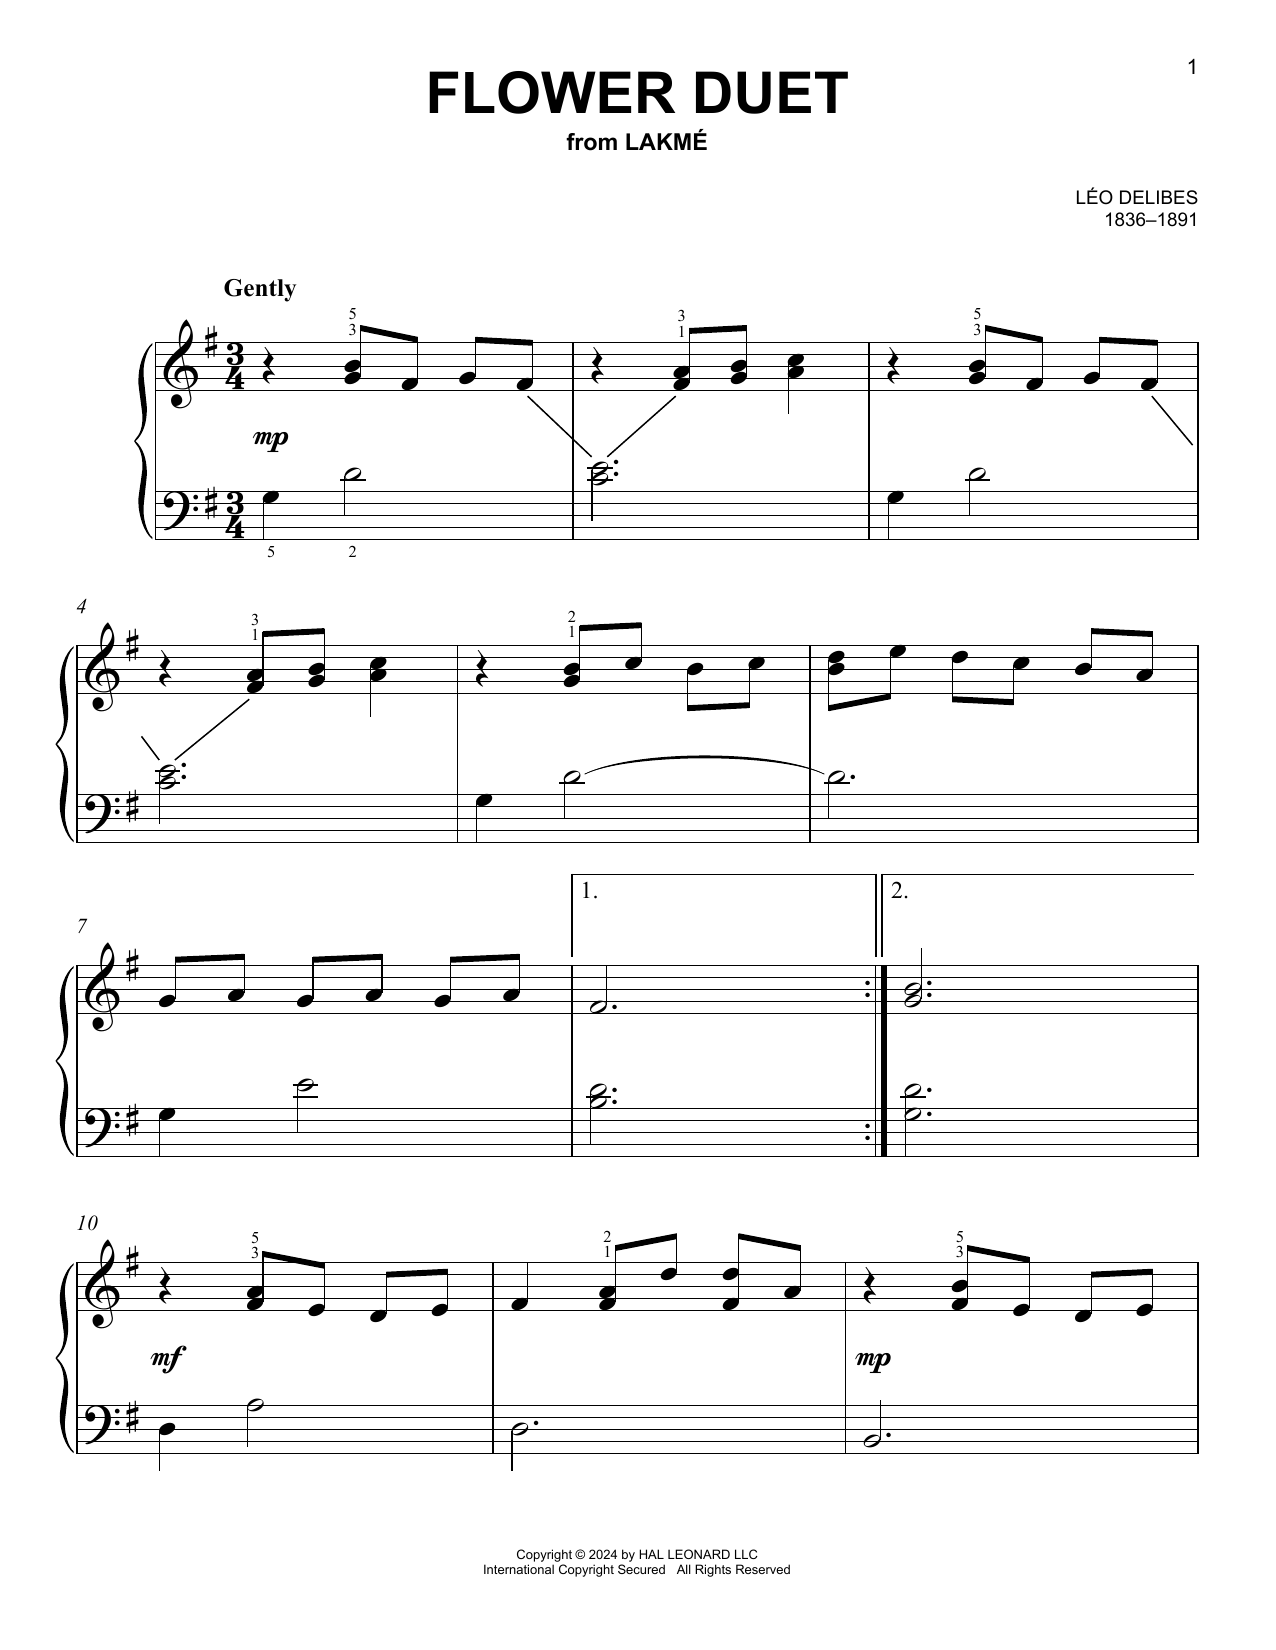 Leo Delibes Flower Duet sheet music notes printable PDF score